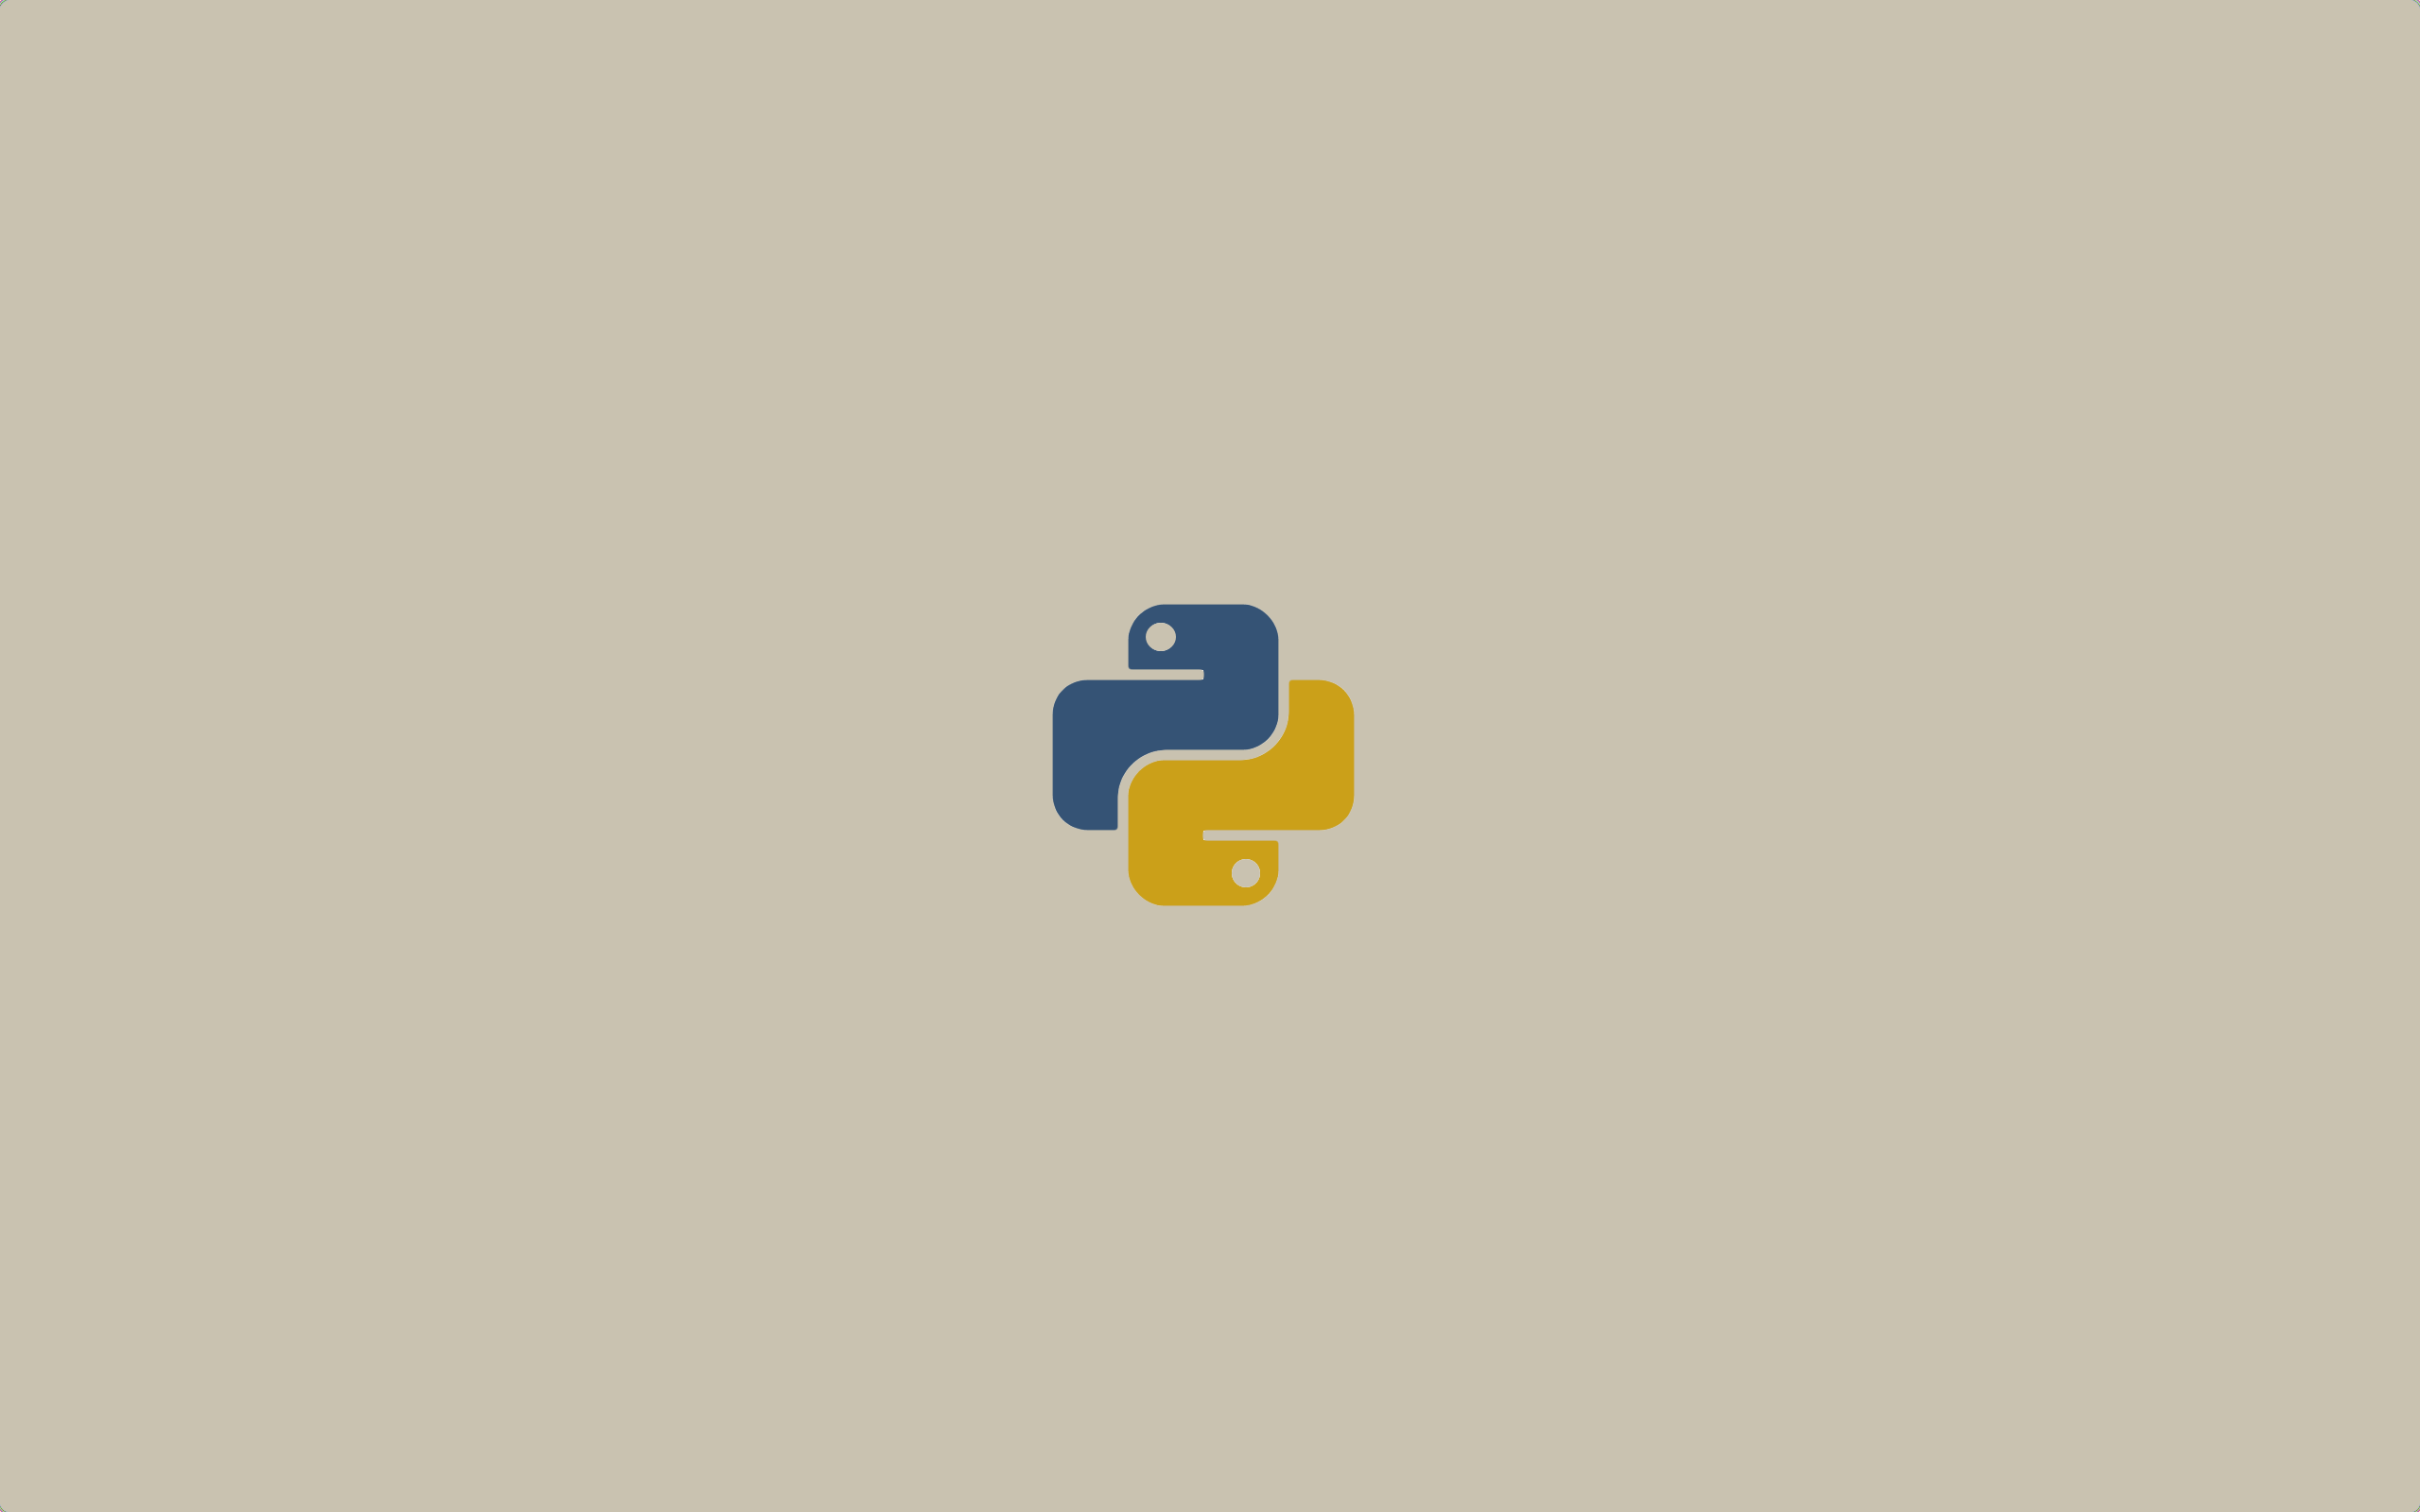 #Python (programming), #Linux wallpaper. Mocah HD Wallpaper